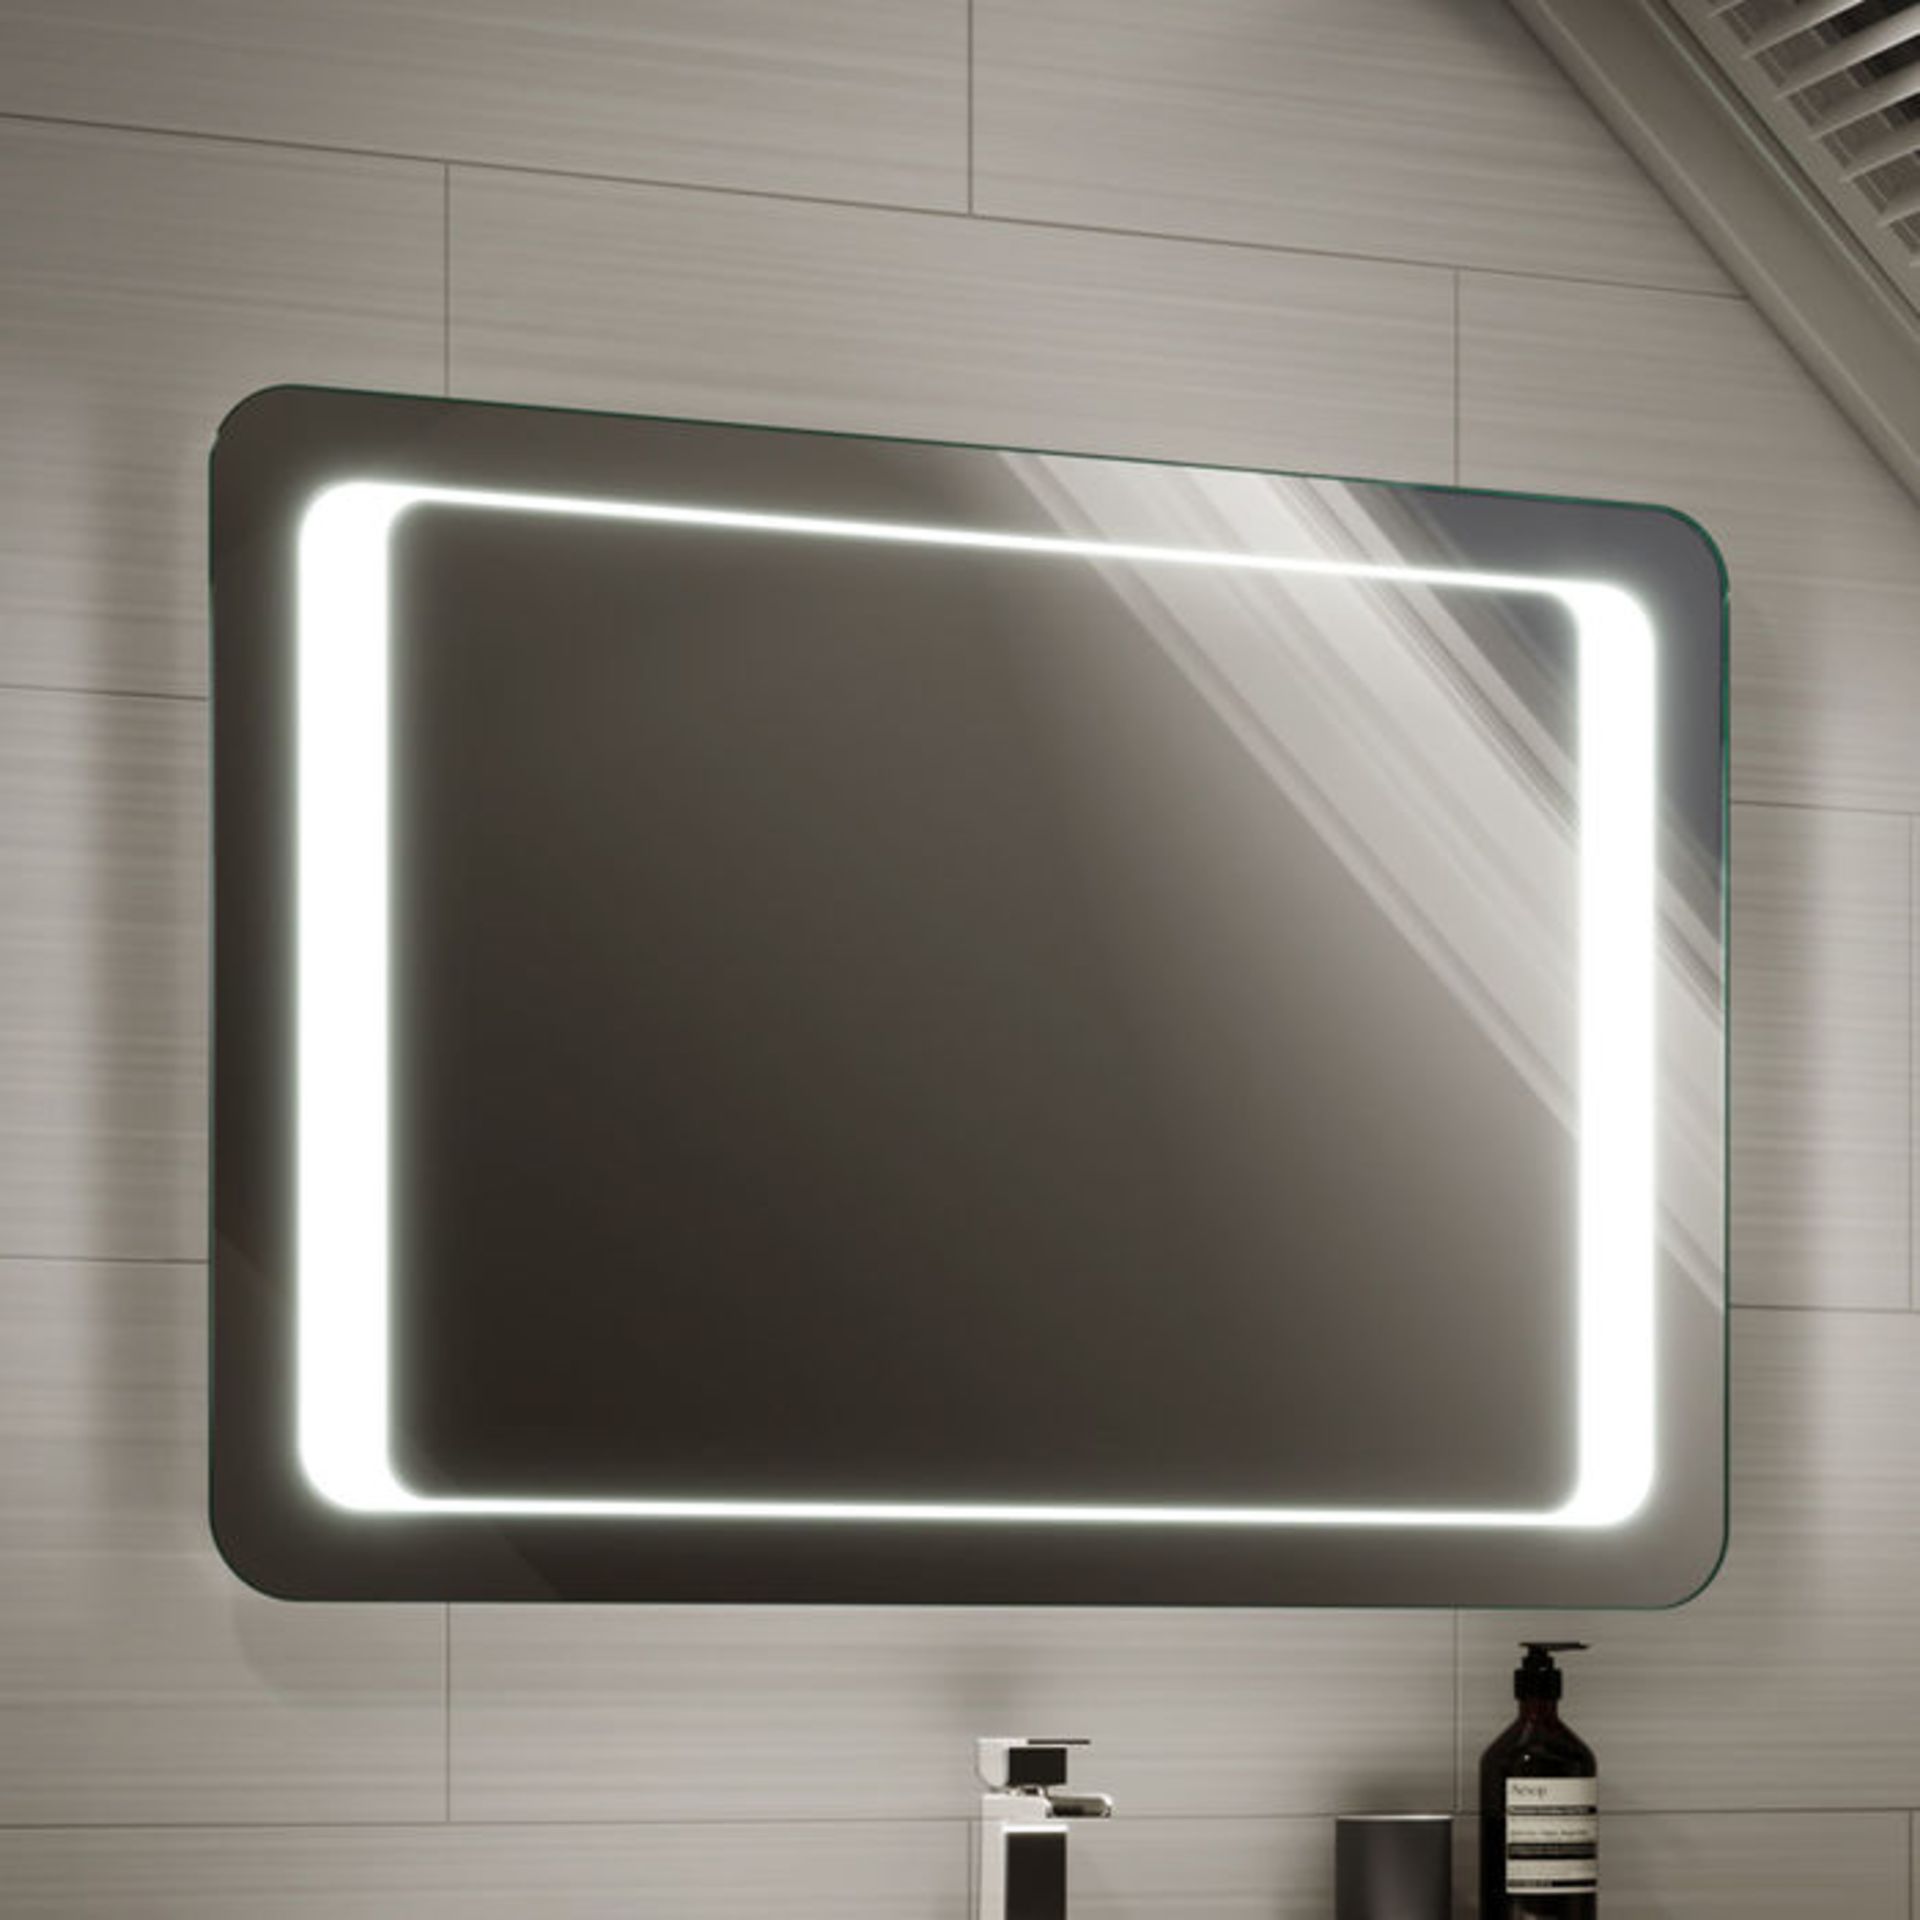 (AL140) 900x650mm Quasar Illuminated LED Mirror. RRP £349.99. Energy efficient LED lighting with